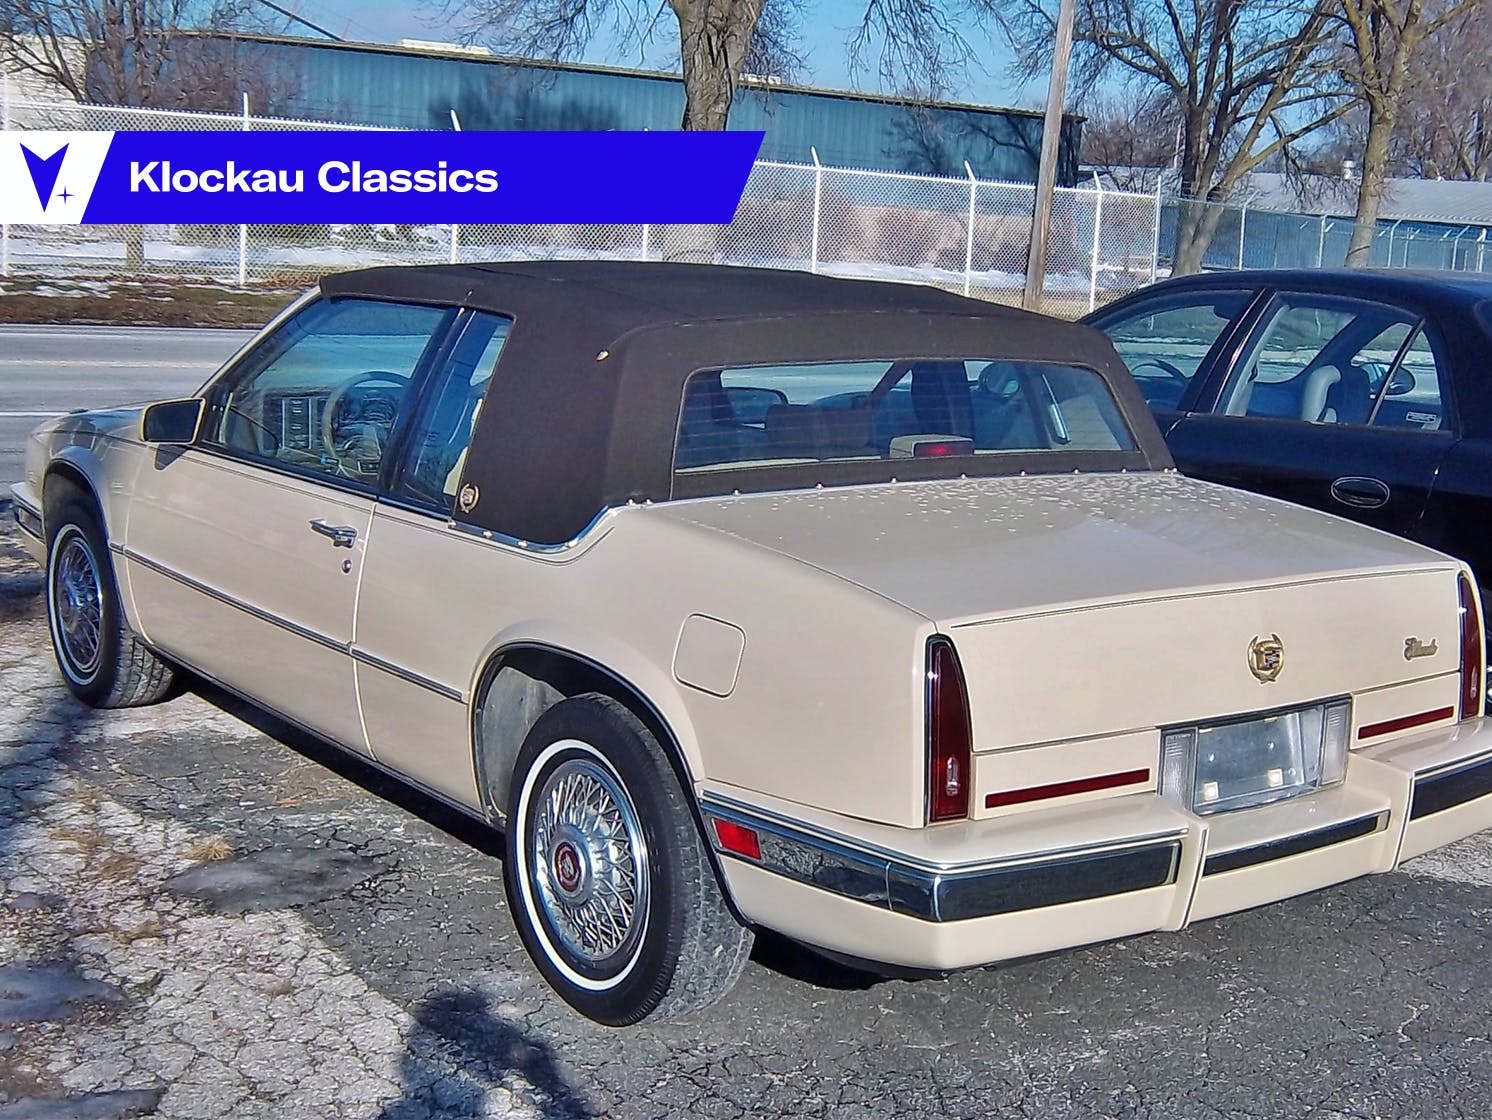 1986 Cadillac Eldorado: There was shrinkage! - Hagerty Media